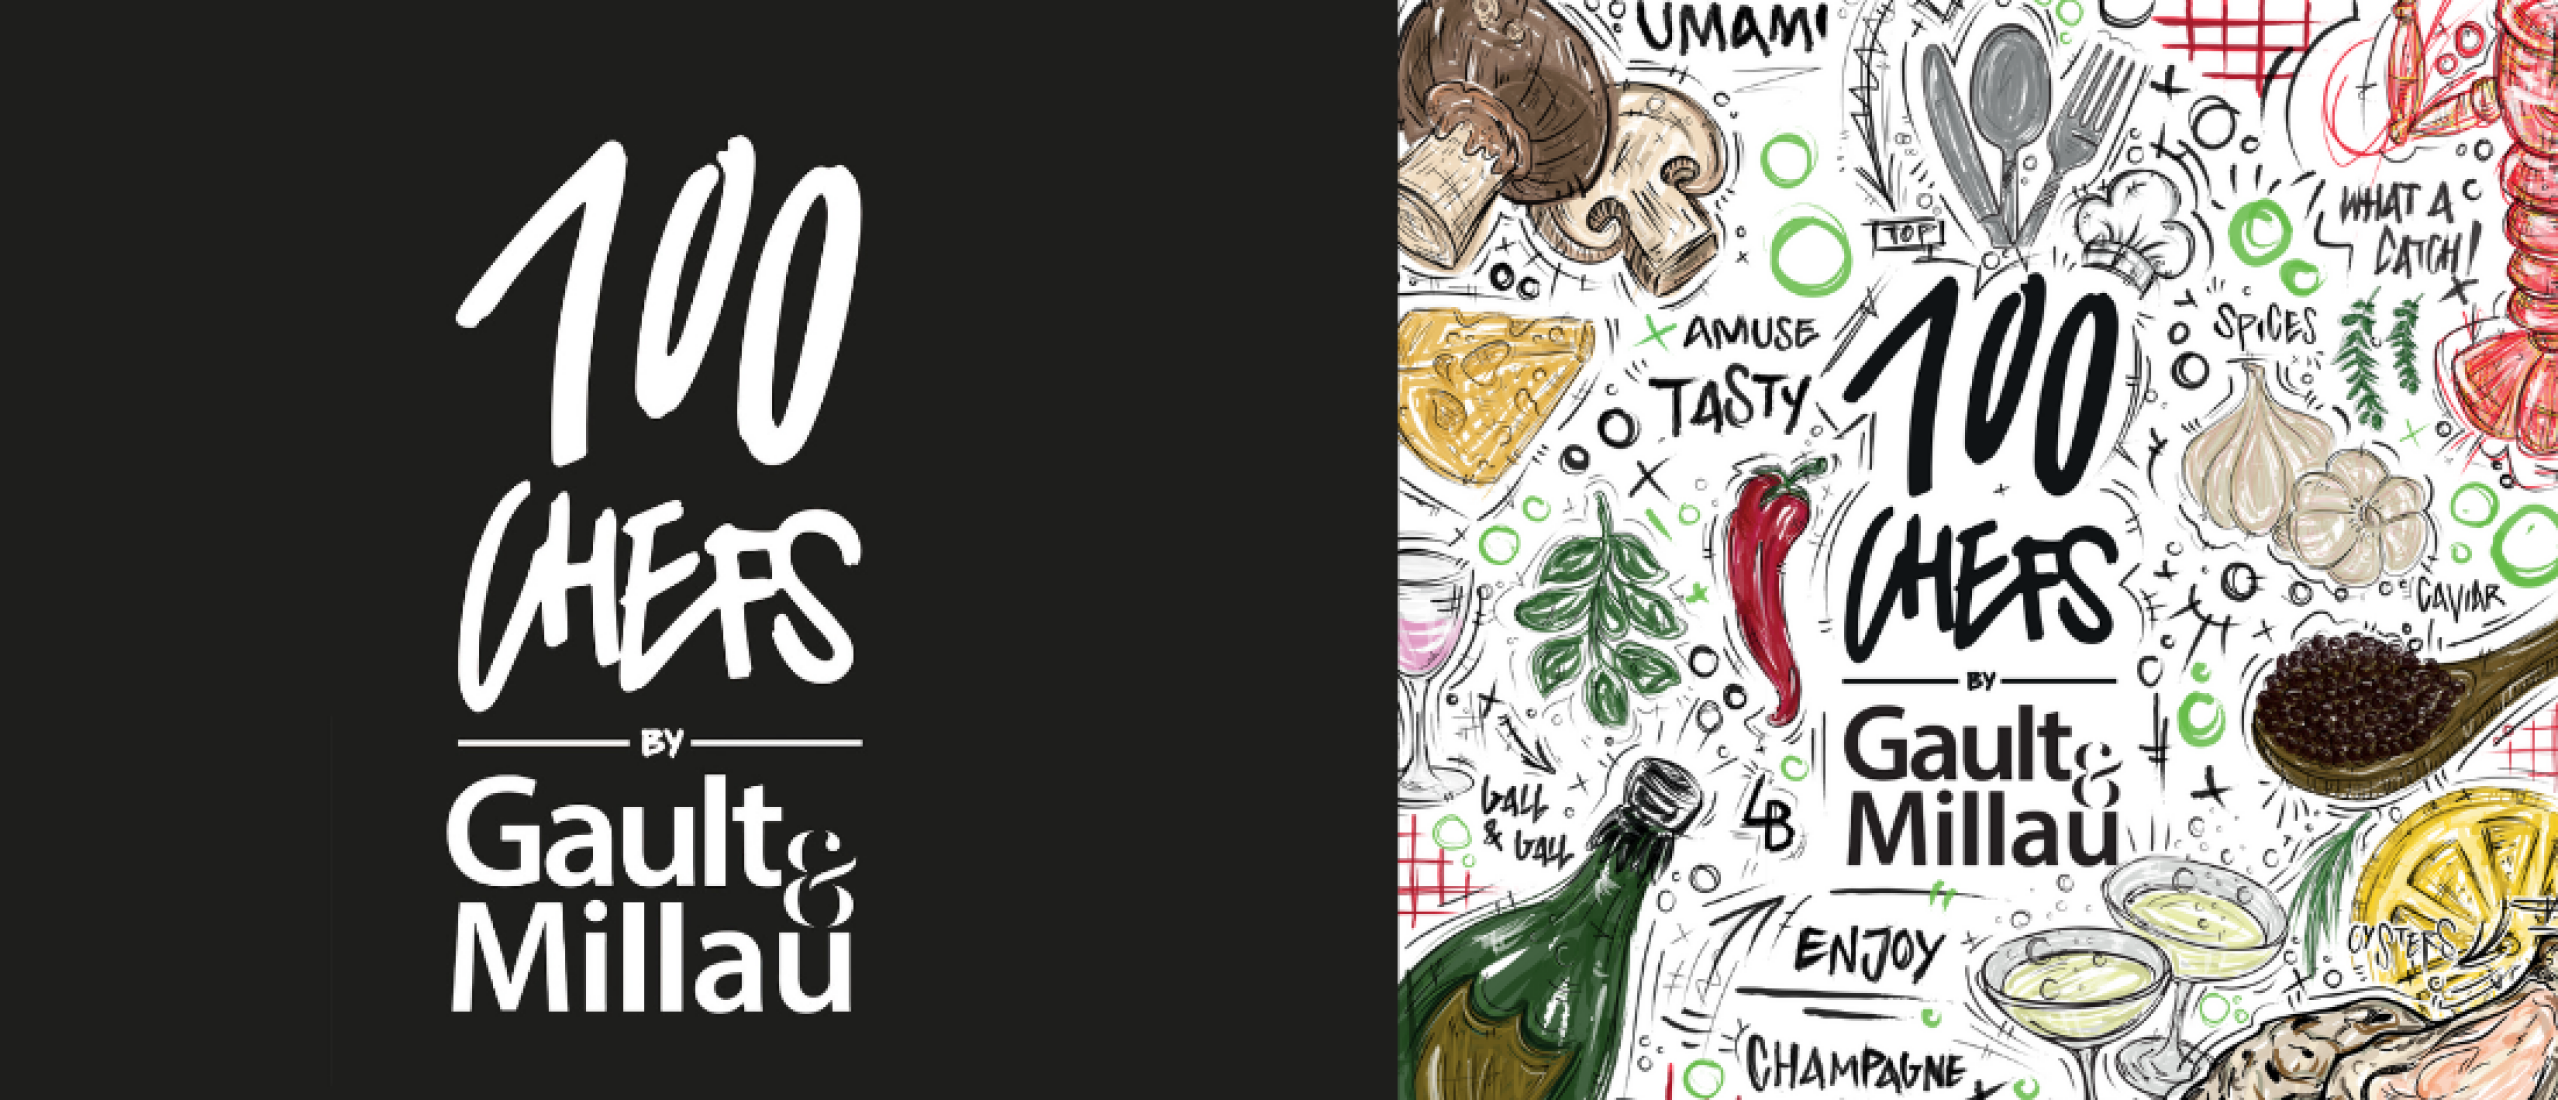 Groots culinair evenement:  ‘100Chefs by Gault&Millau’